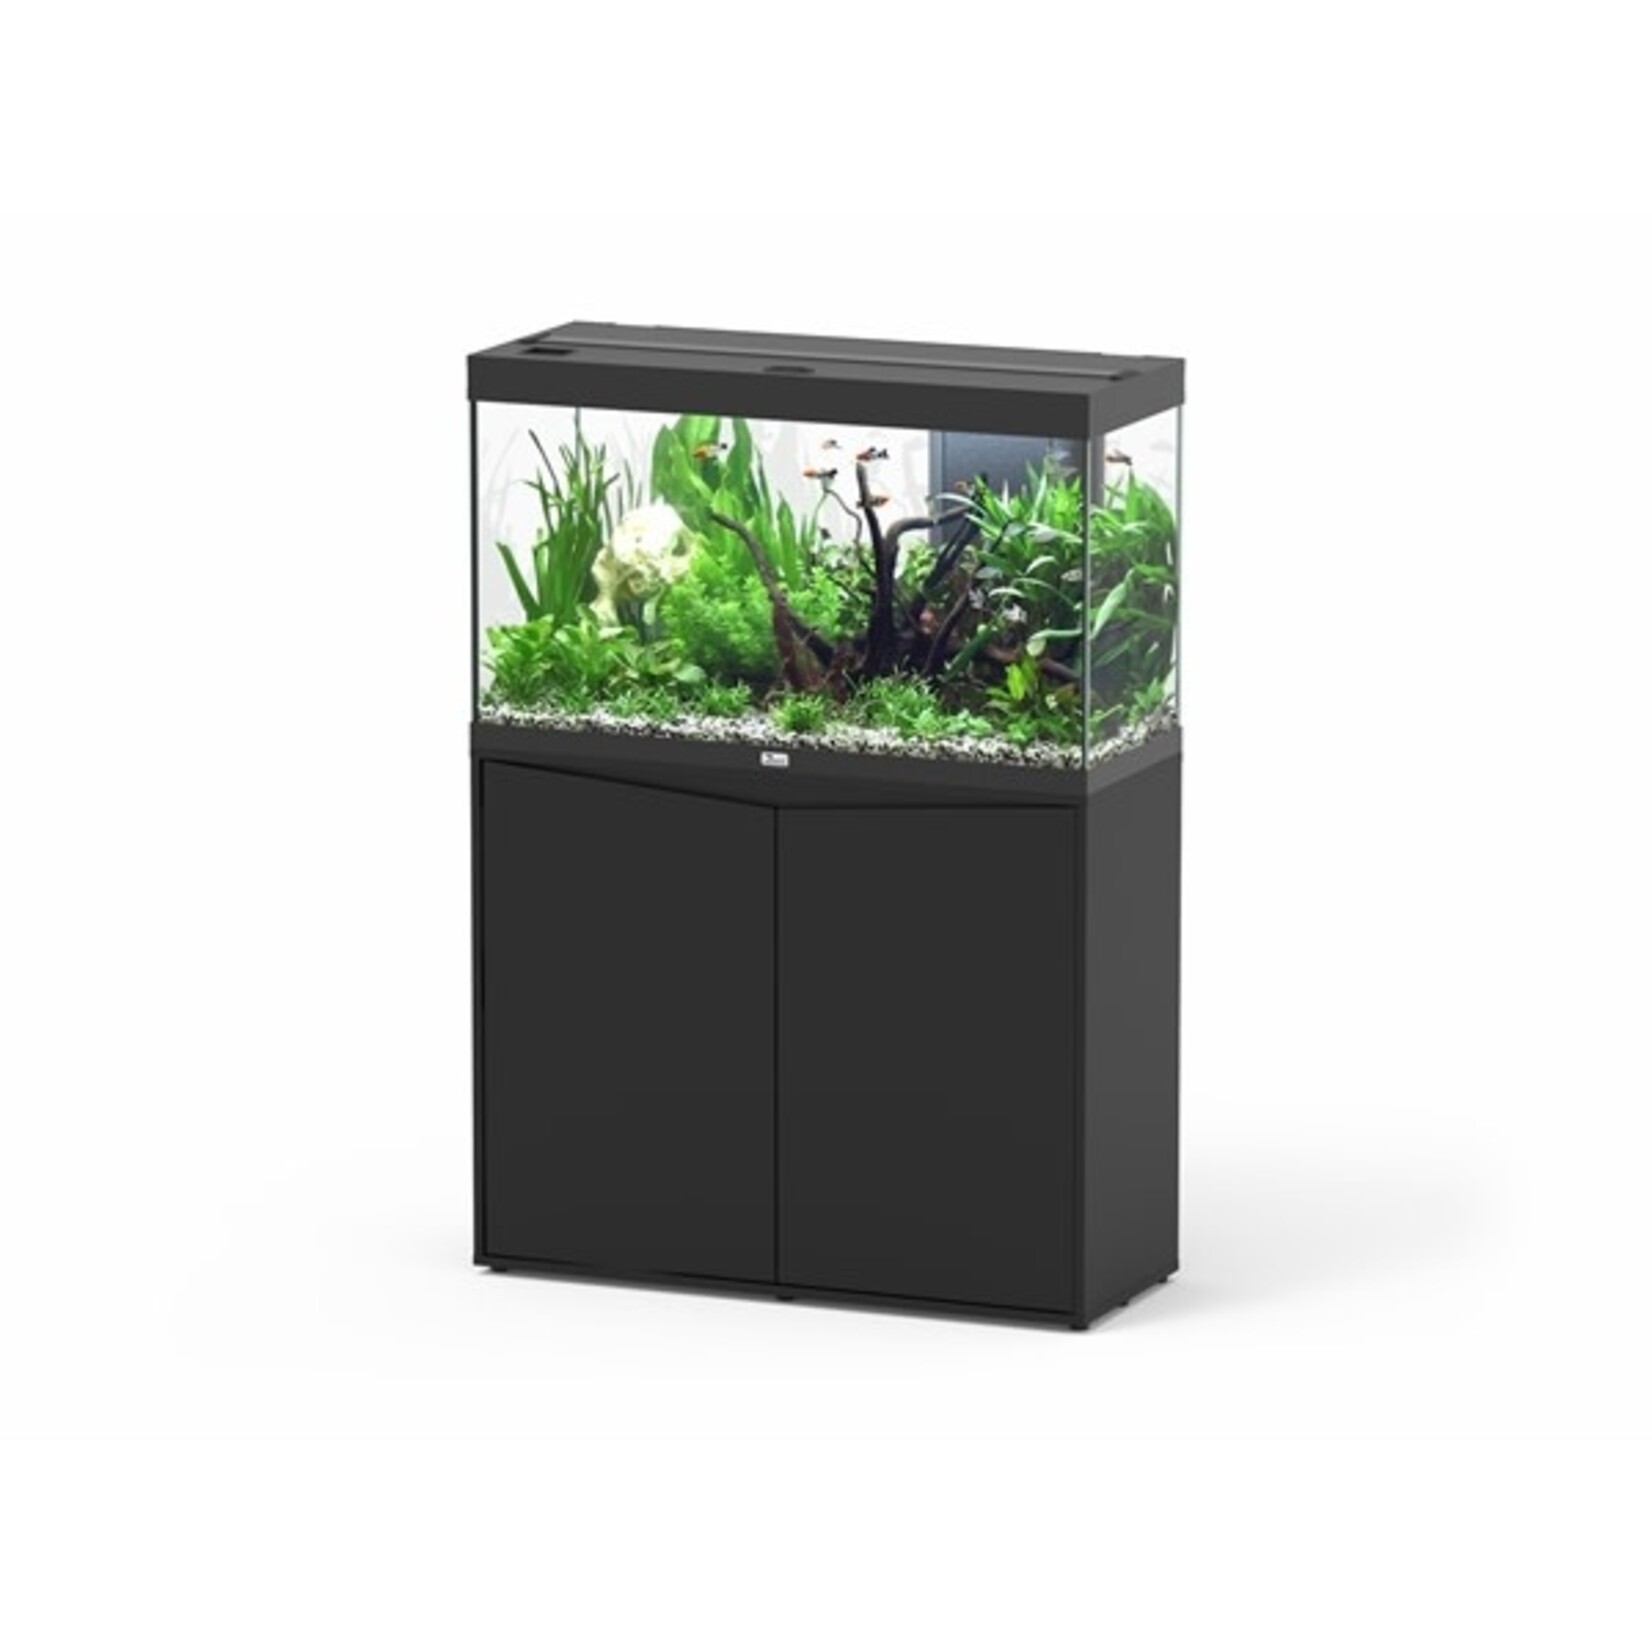 Aquatlantis Aquarium splendid 100 biobox zwart -001